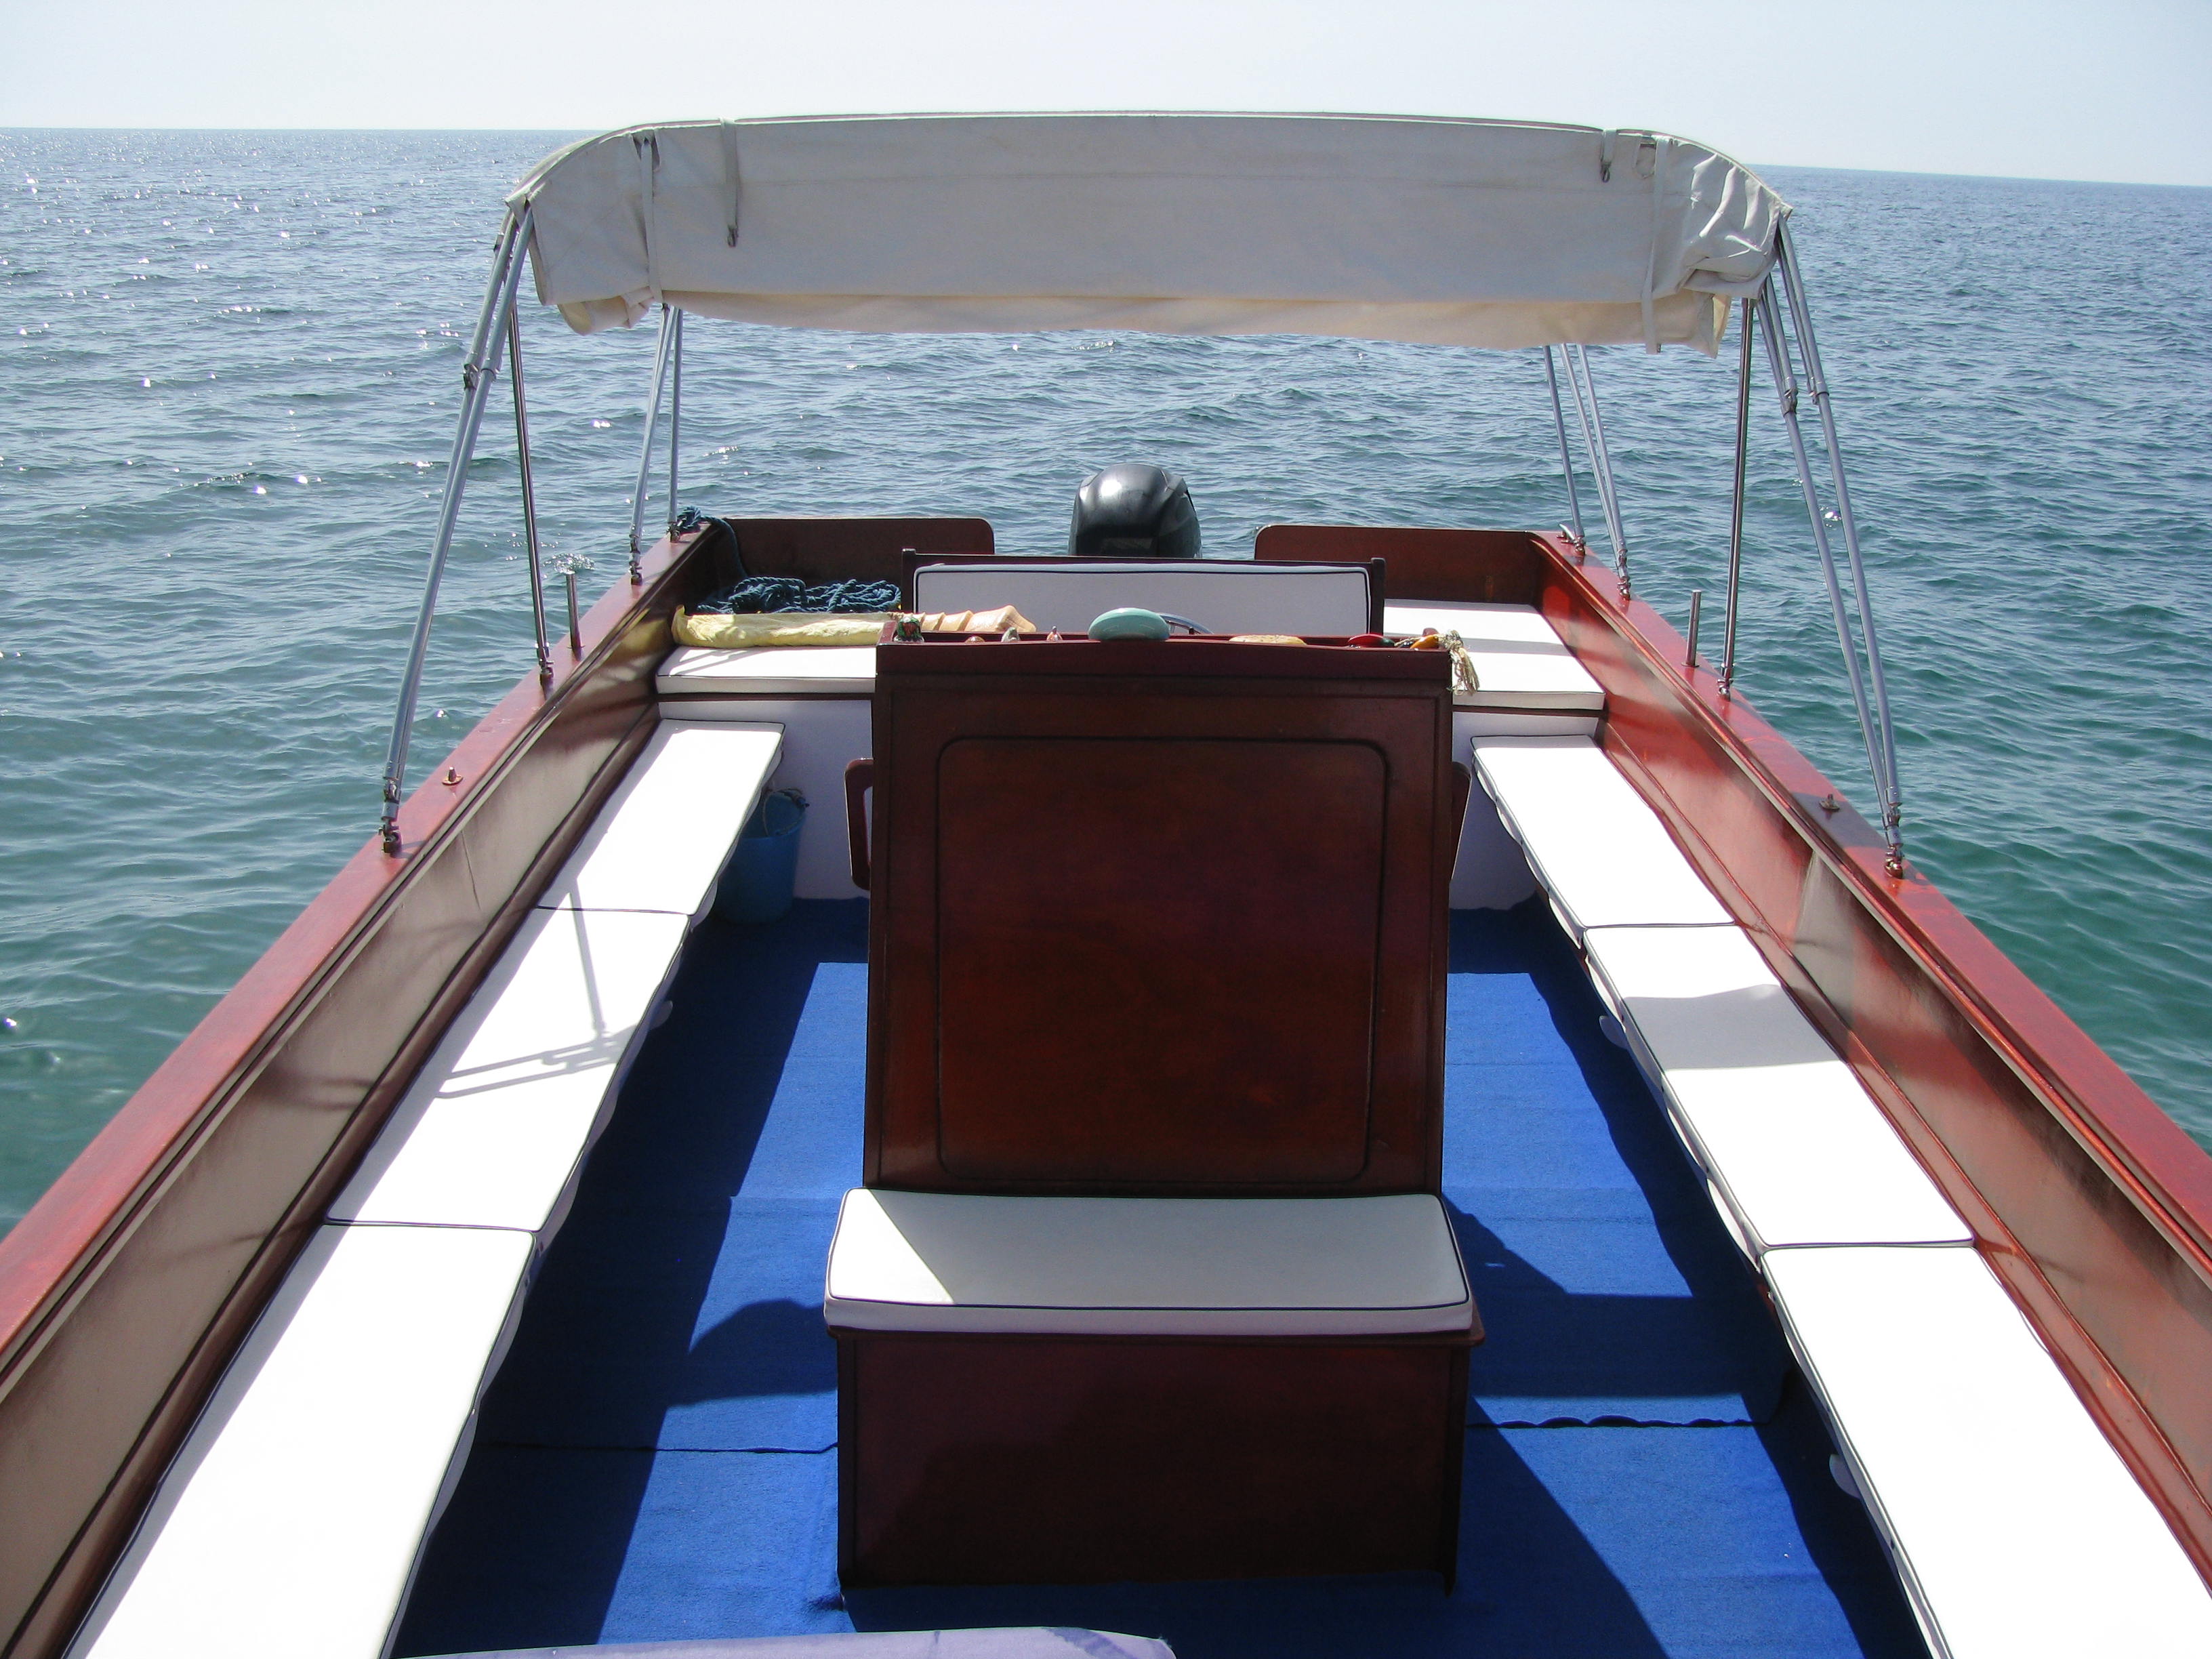 luxury boat tour taormina